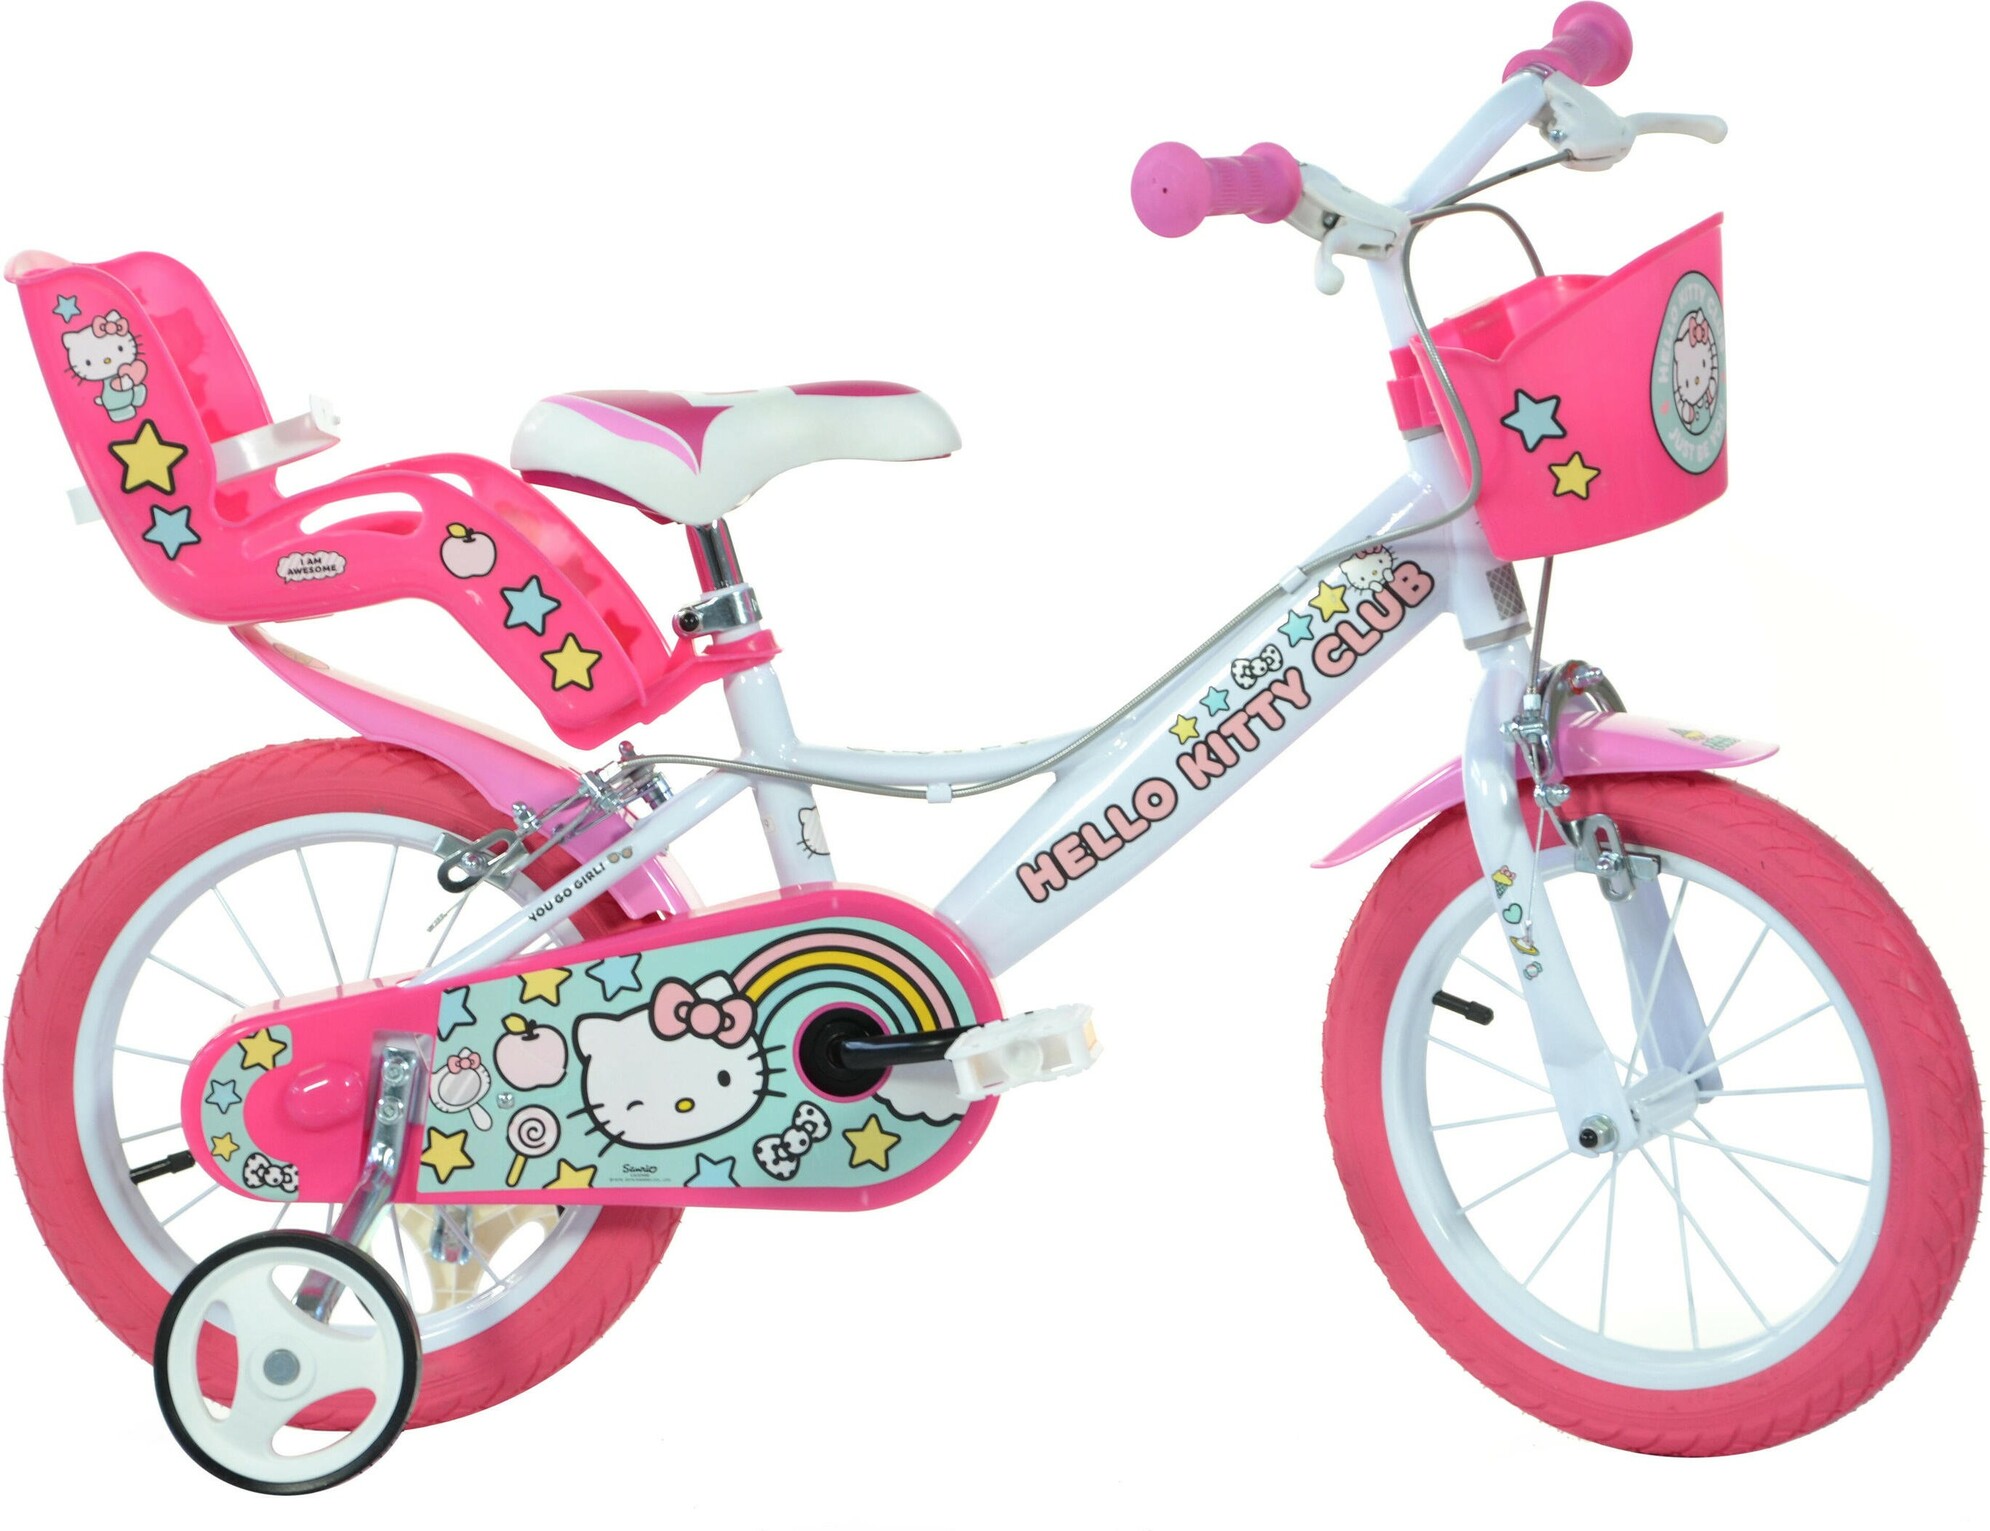 DINO Bikes - Dětské kolo 16" 164RL-HK2 Hello Kitty 2